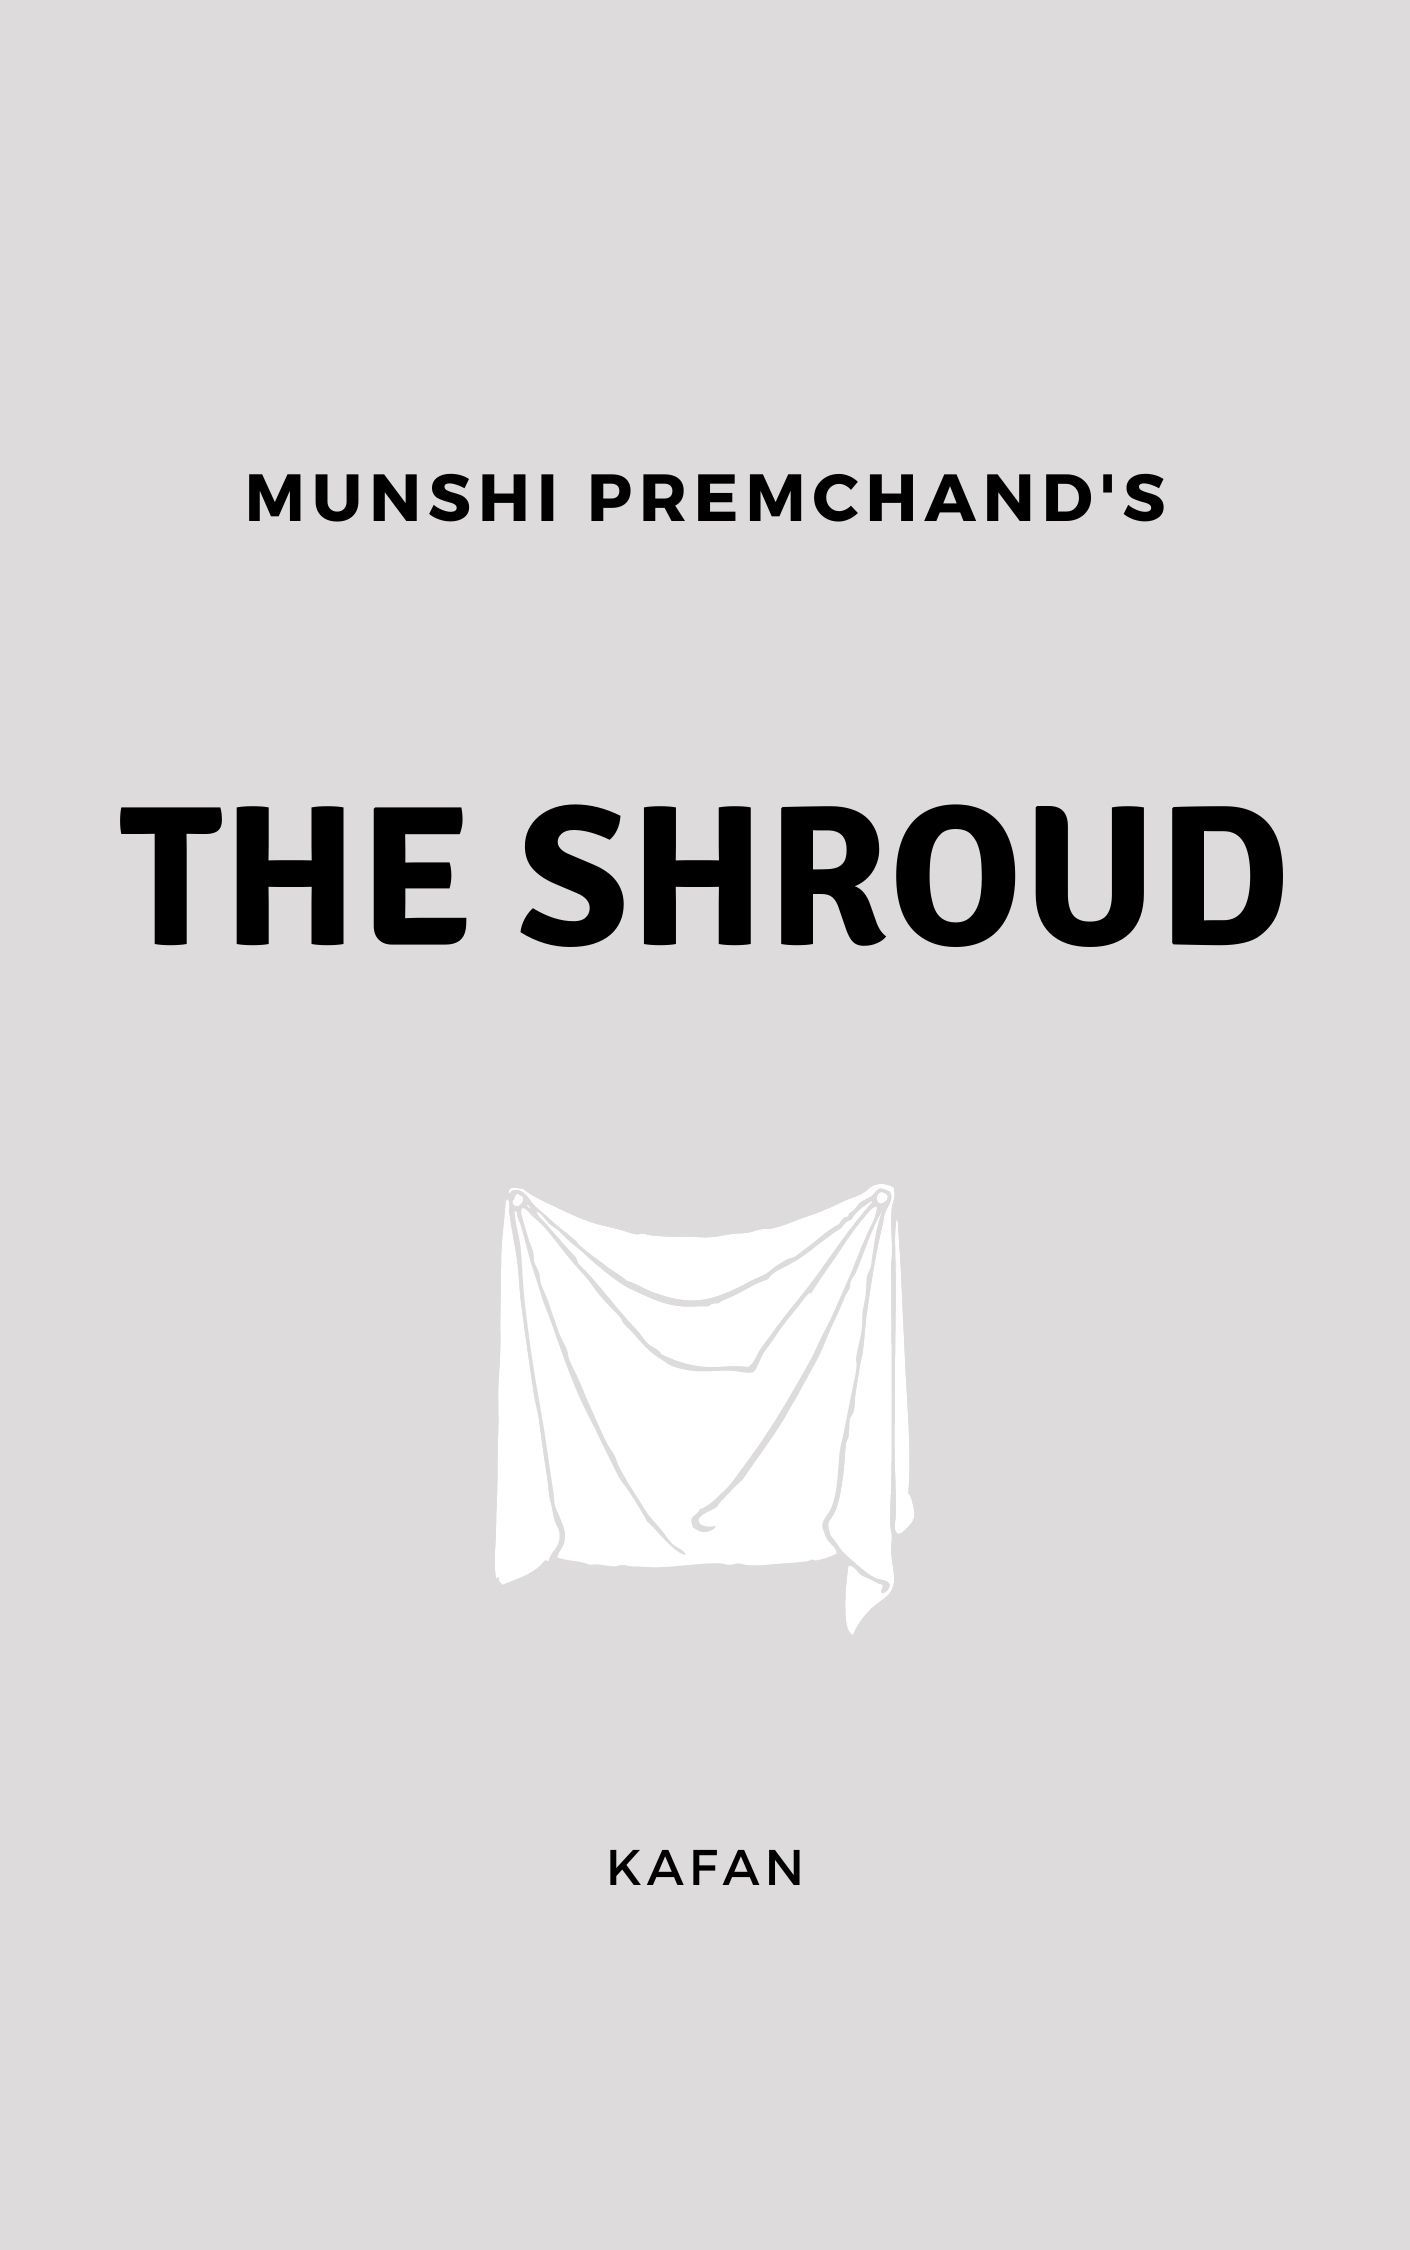 The Shroud by Munshi Premchand